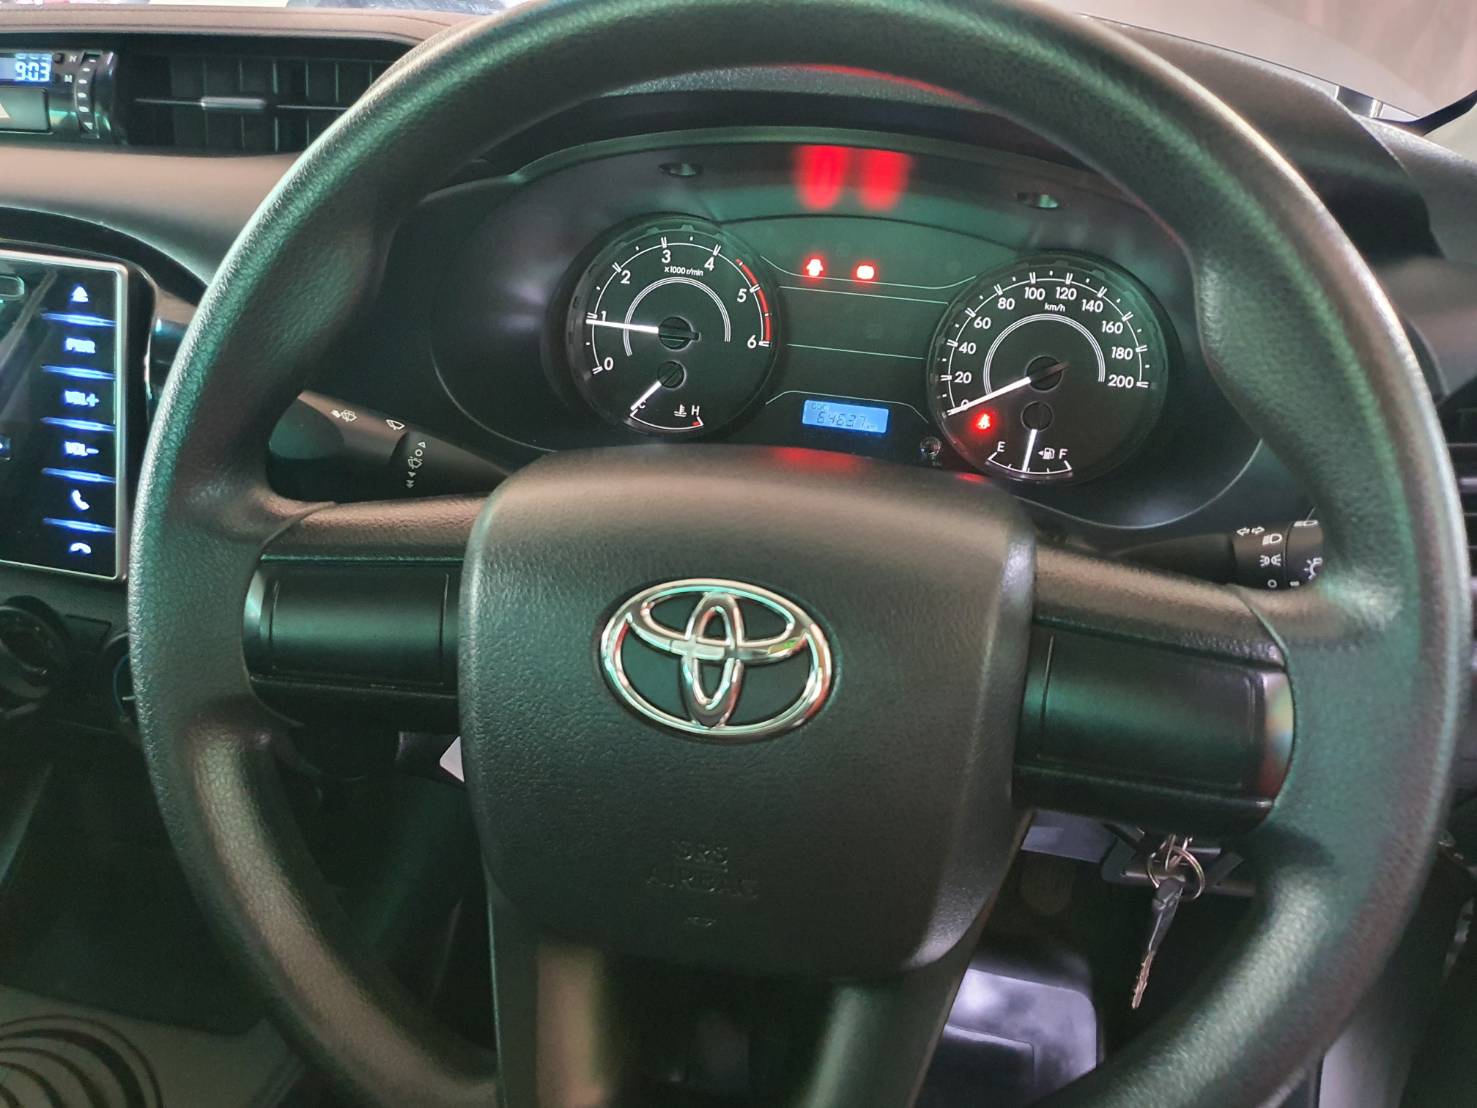 Toyota Hilux Revo 2.4J Plus Standard Cabกระบะตอนเดียว รถปลายปี 2018 สีเทา มือ1